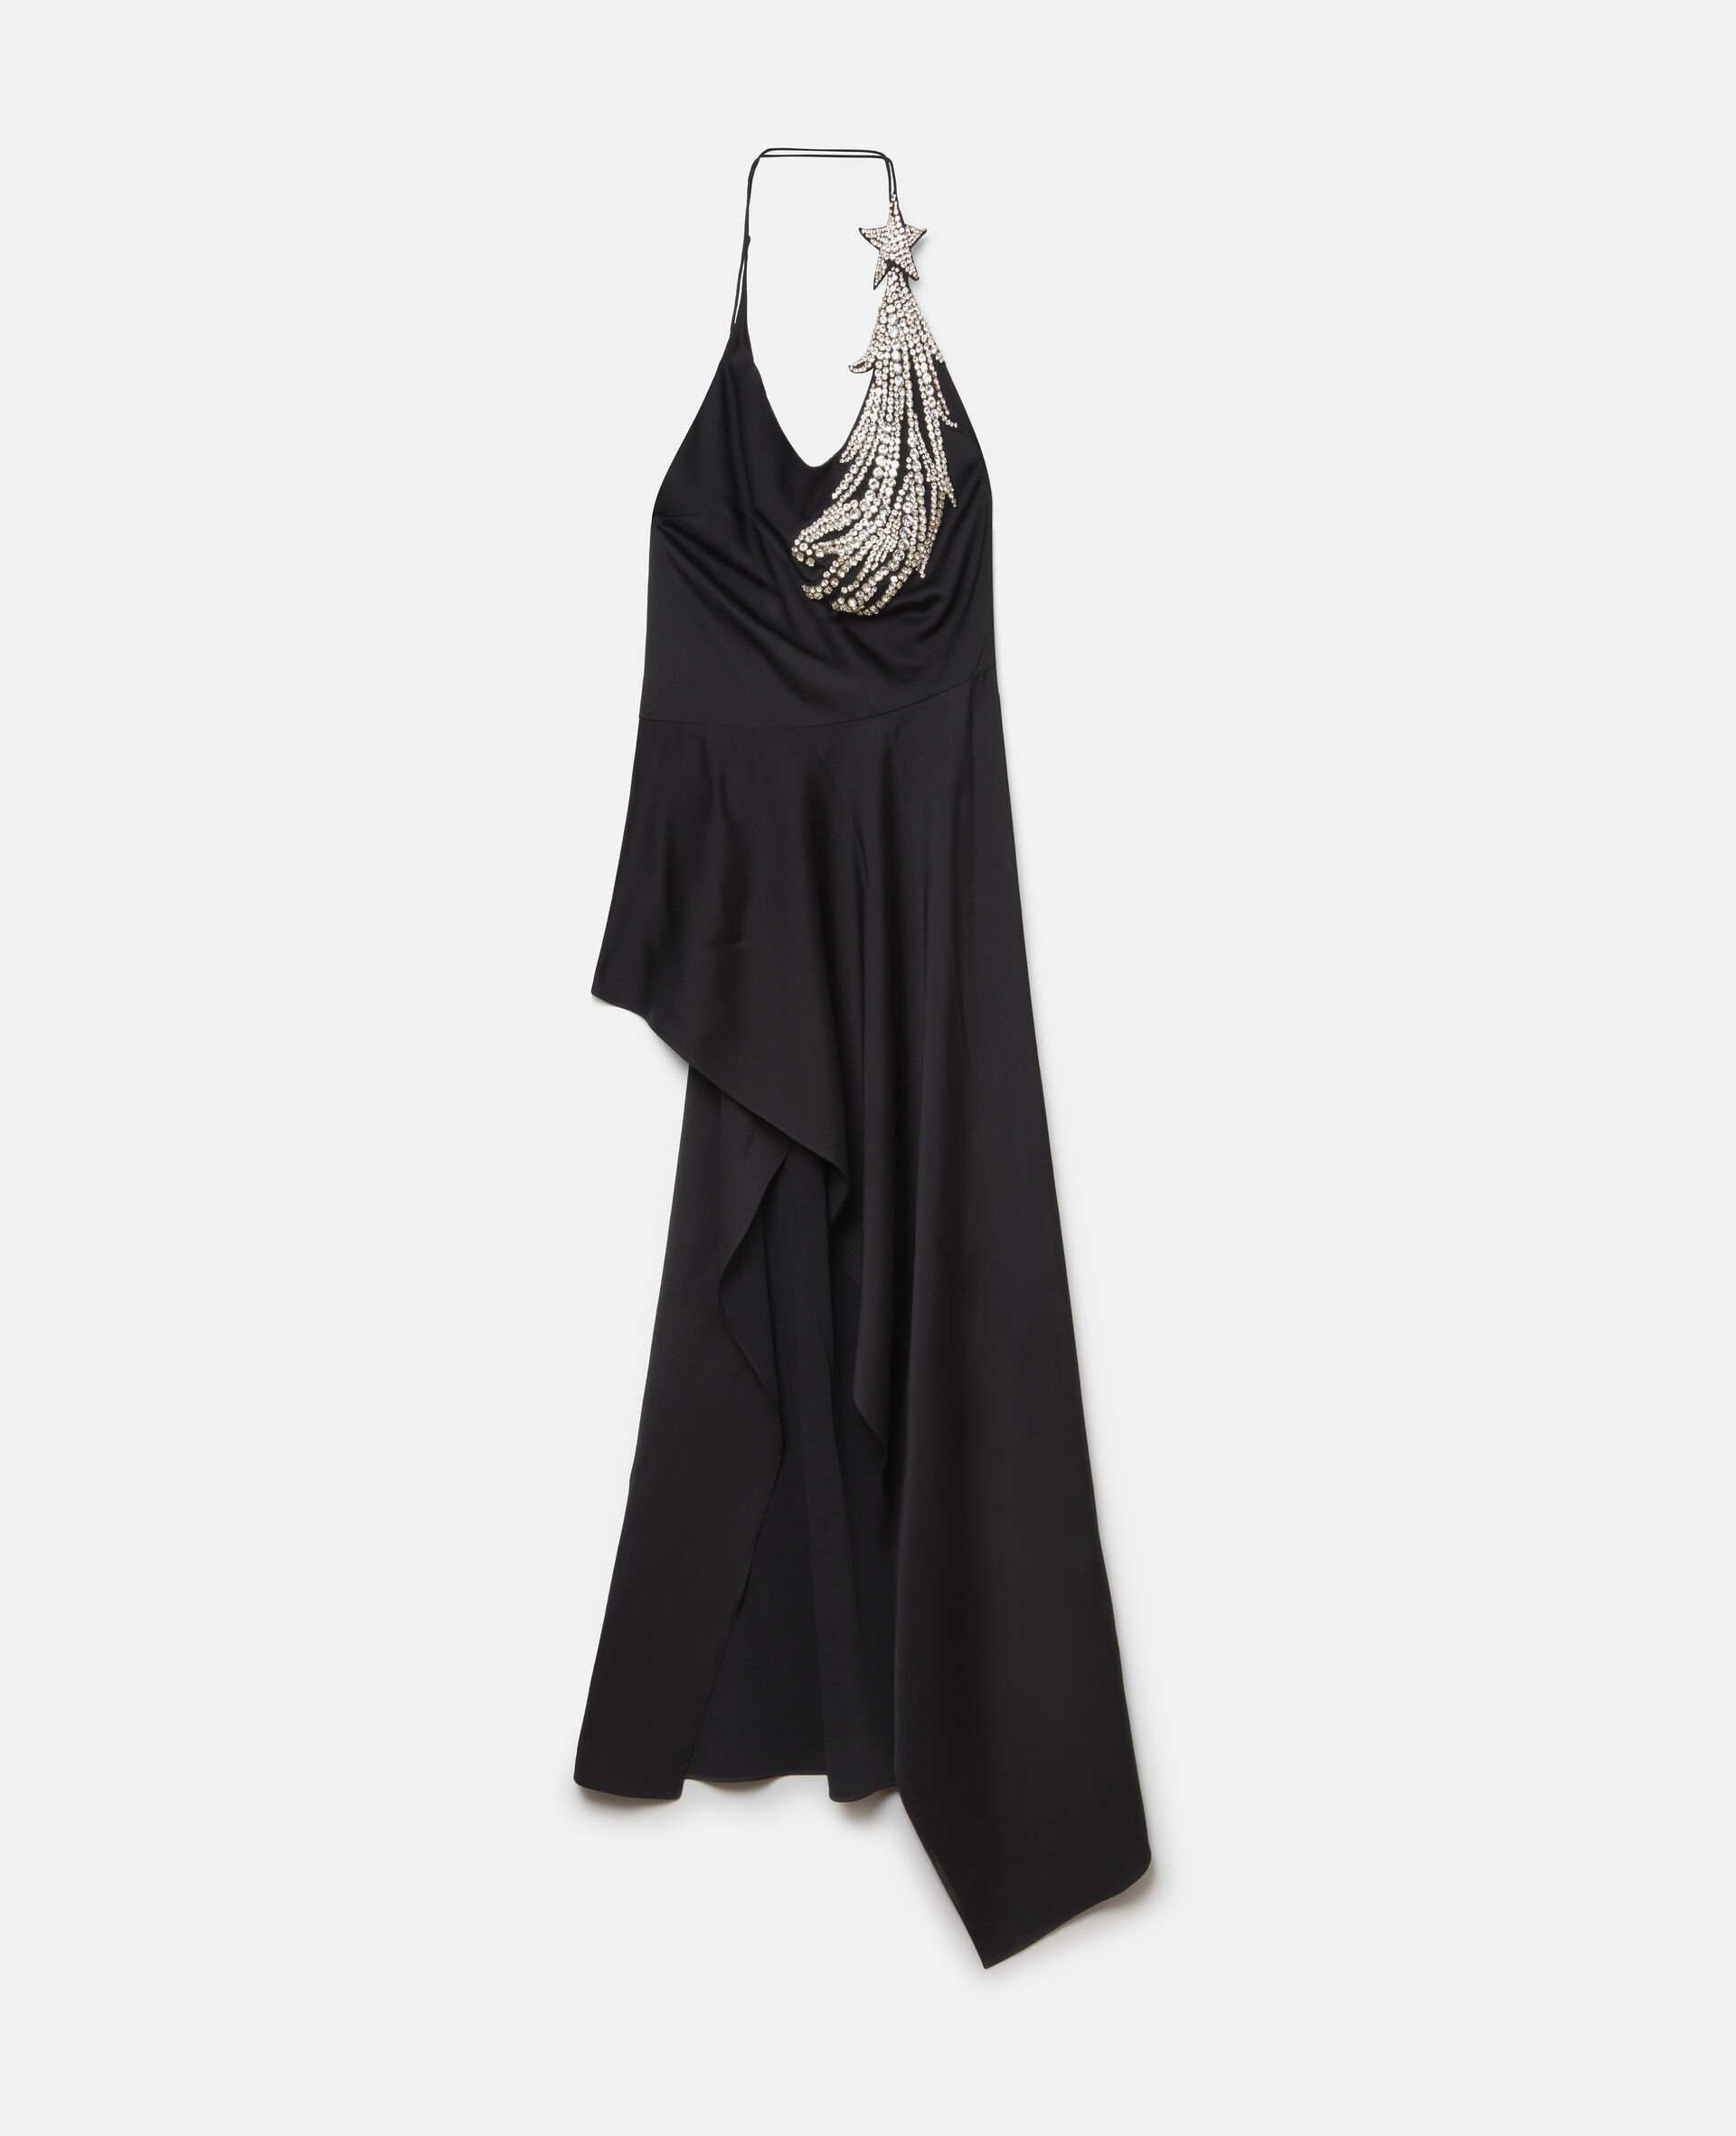 Robe midi asymetrique avec etoile en strass cristal-Noir-medium